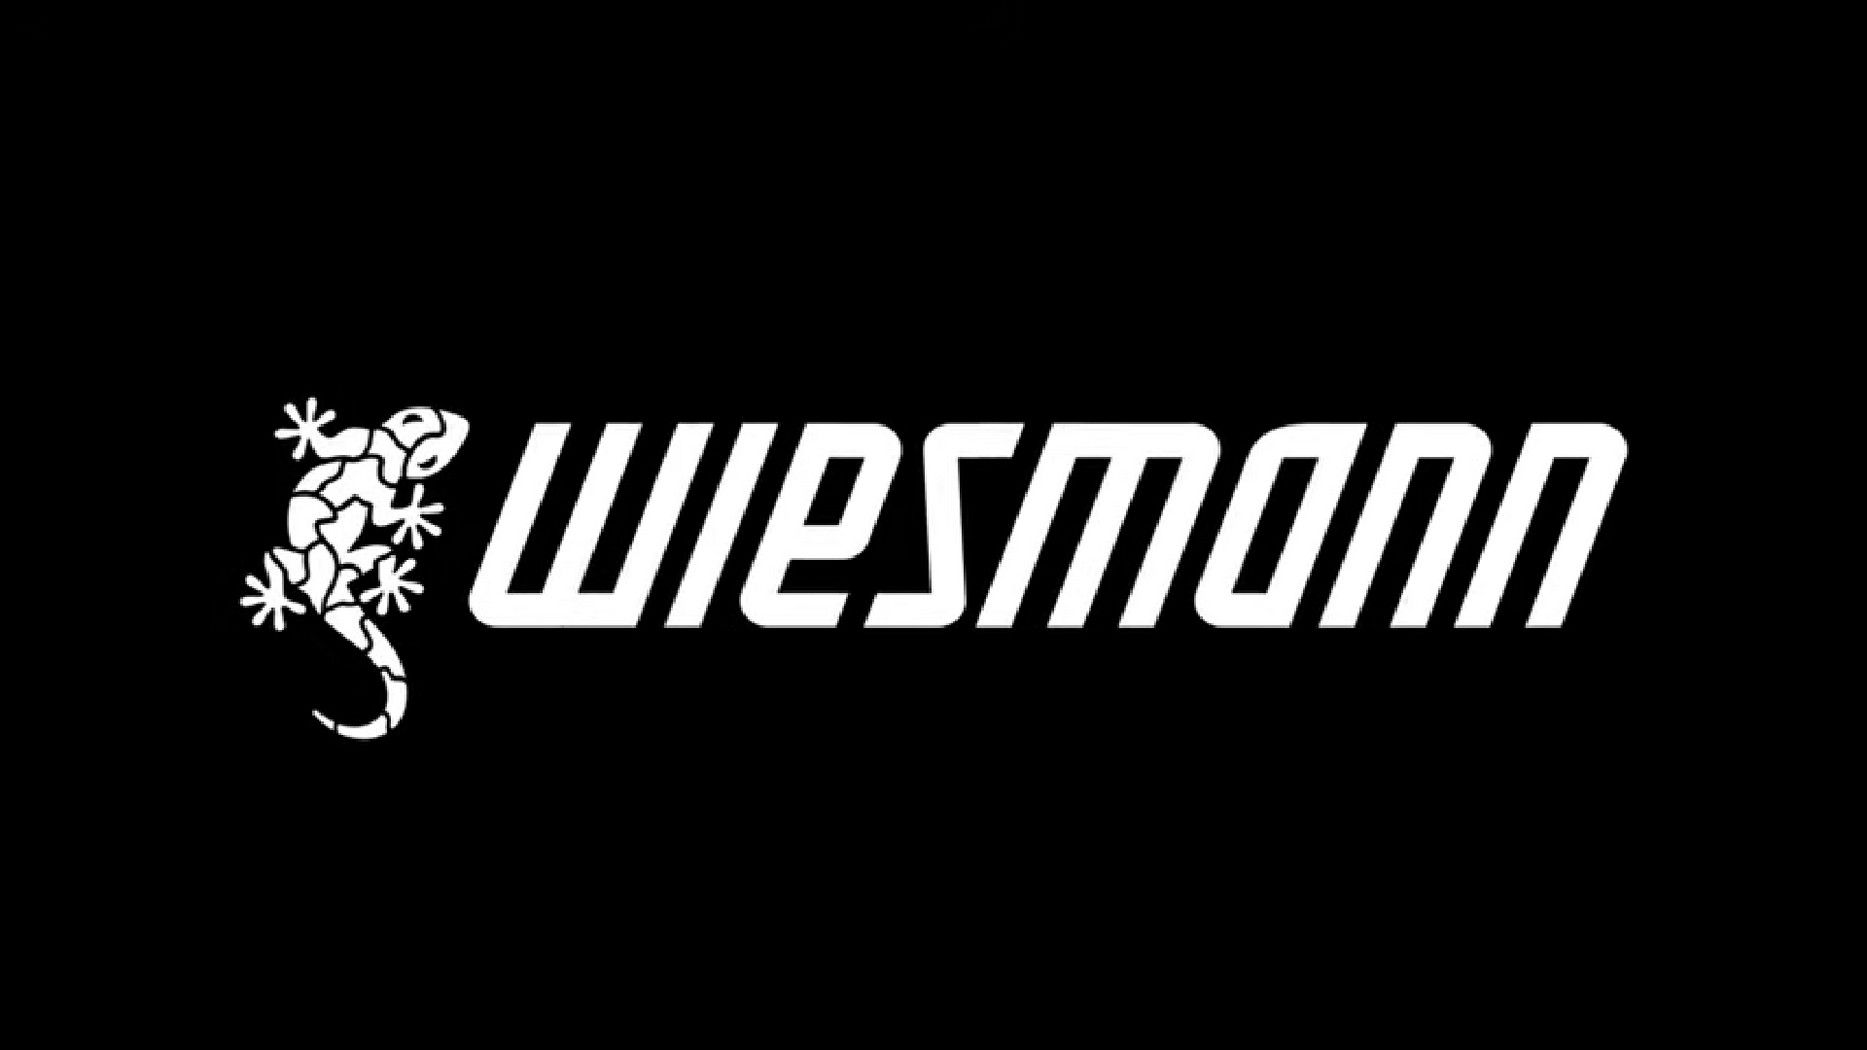 Wiesmann logo, white text black background